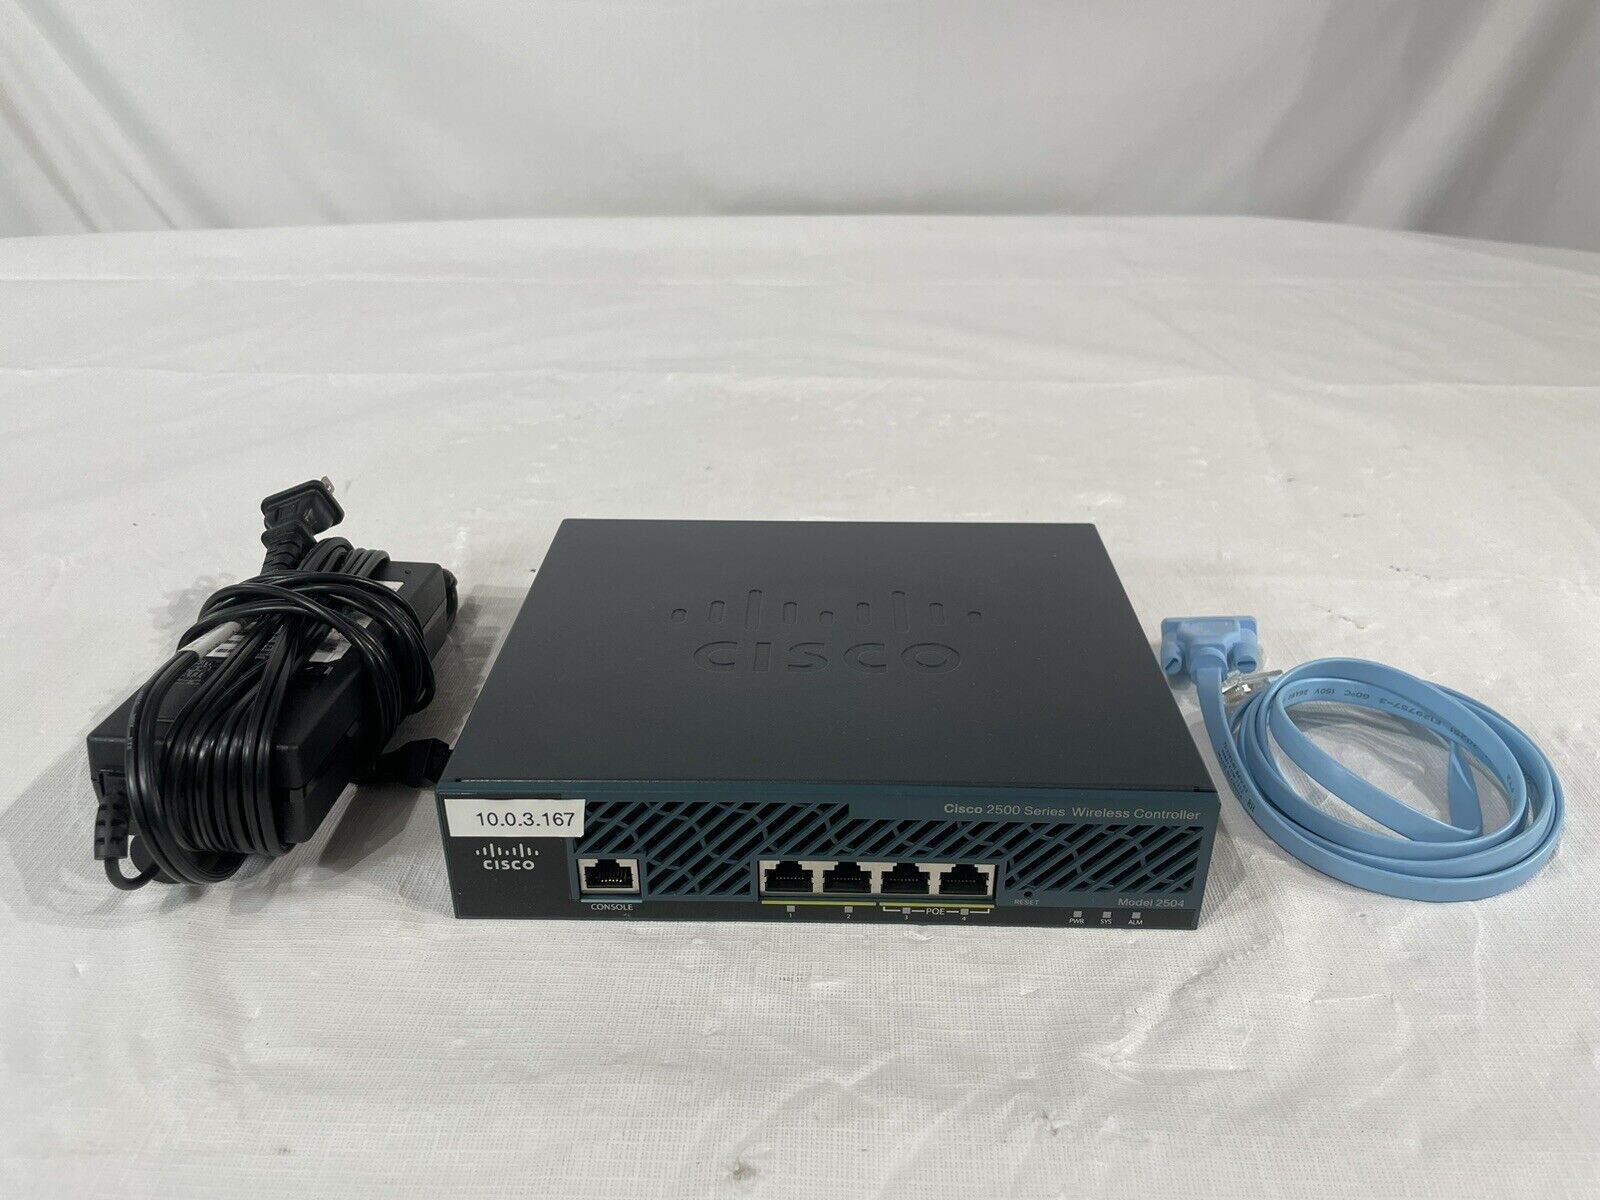 Cisco 2600 Series 2650XM Version Router